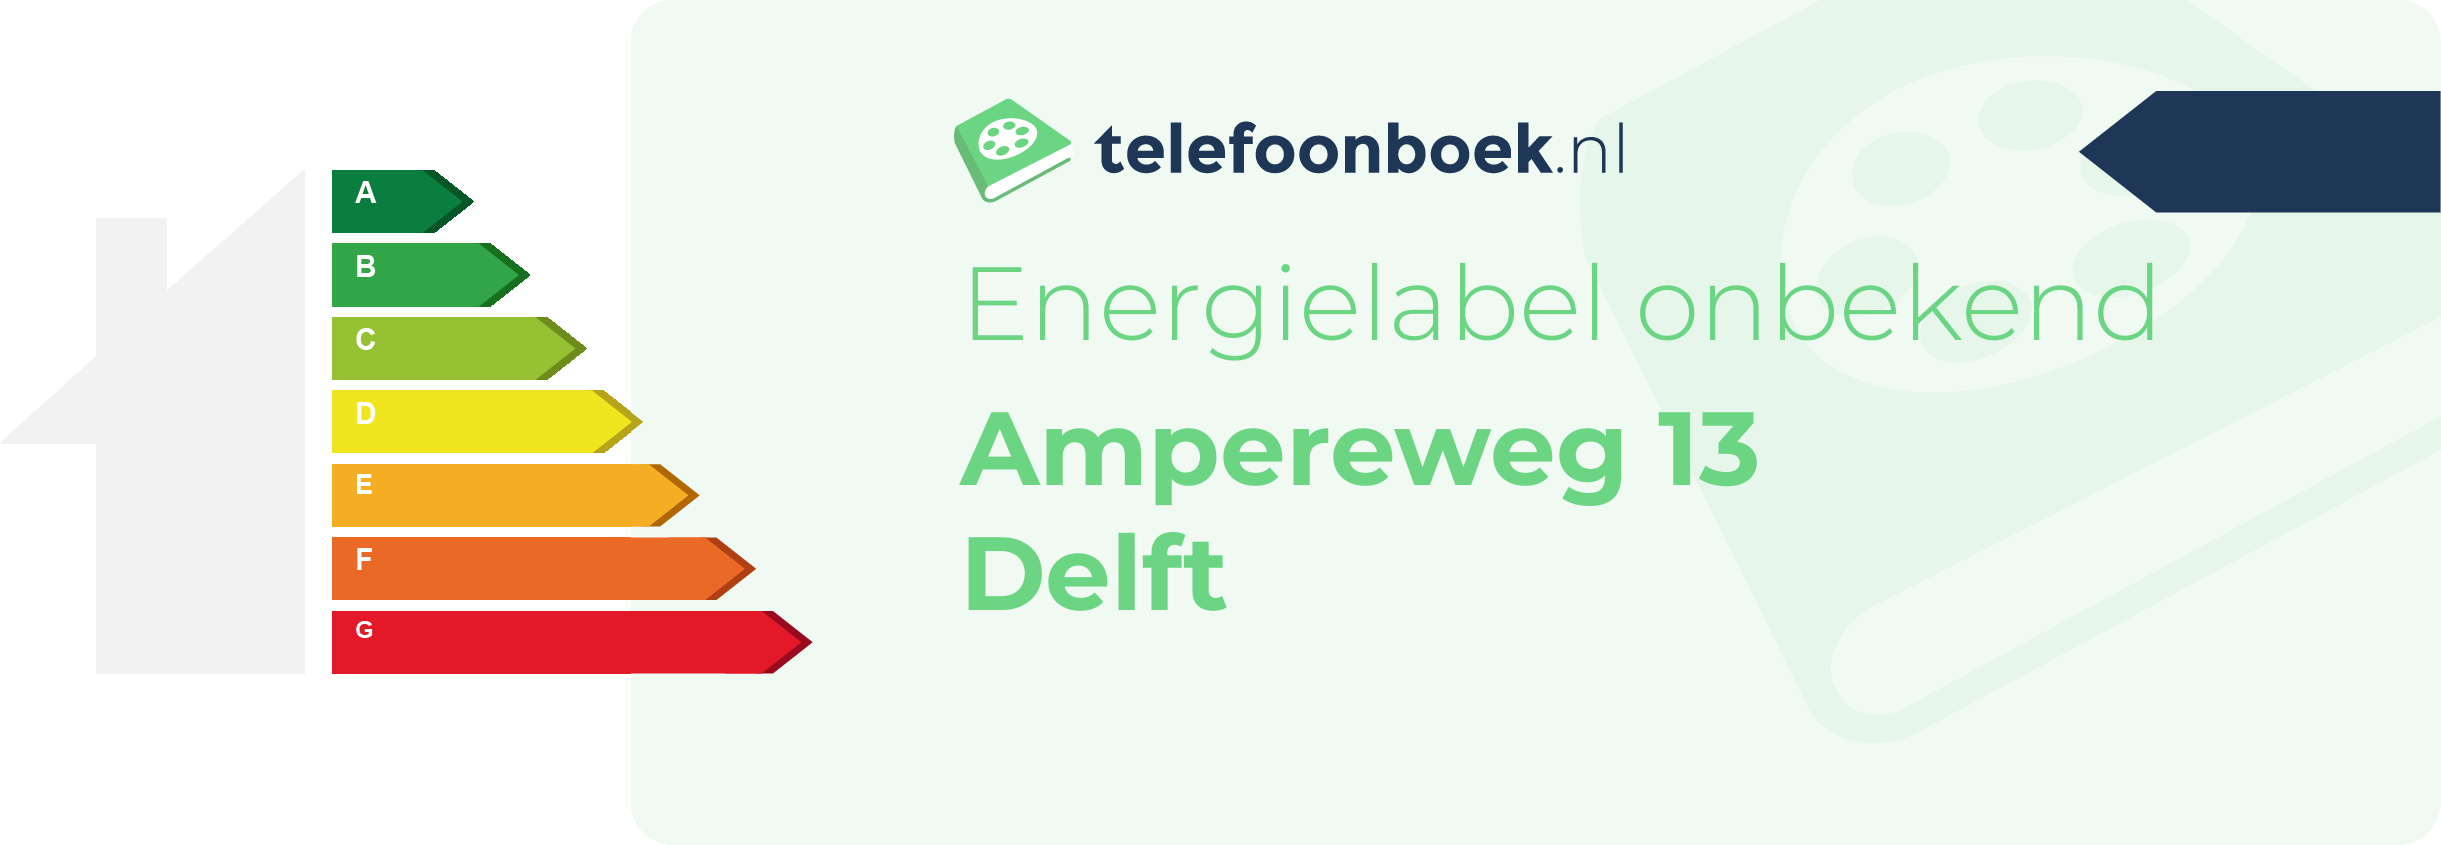 Energielabel Ampereweg 13 Delft